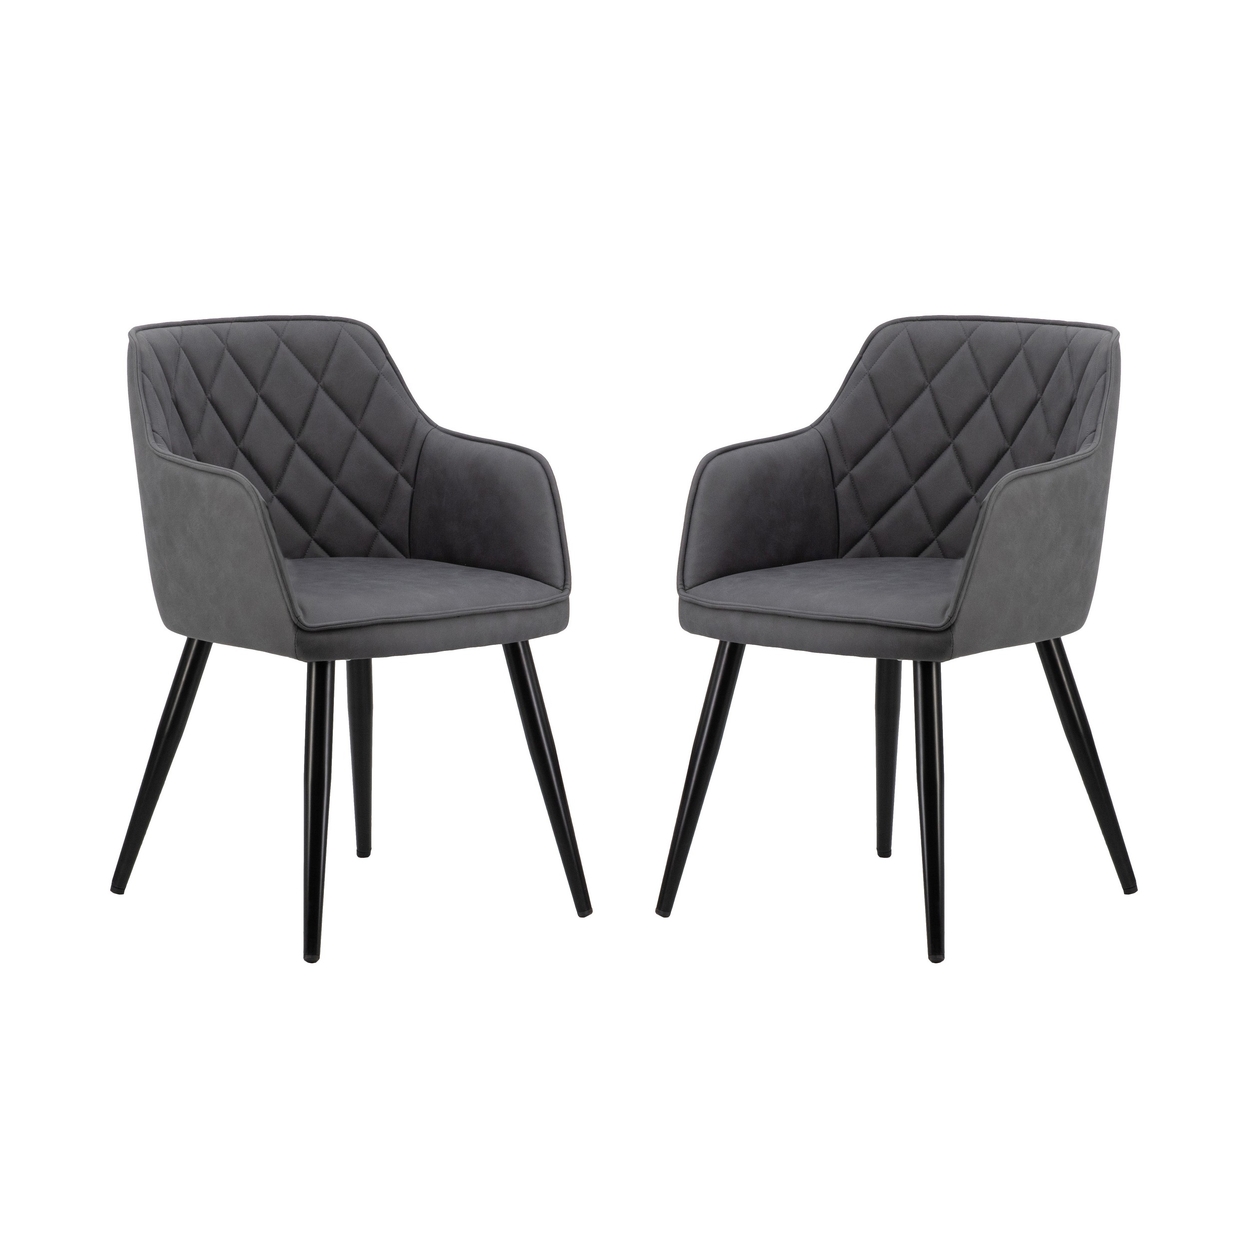 Erin 24 Inch Curved Dining Chair, Gray Fabric, Diamond Pattern Tufting- Saltoro Sherpi